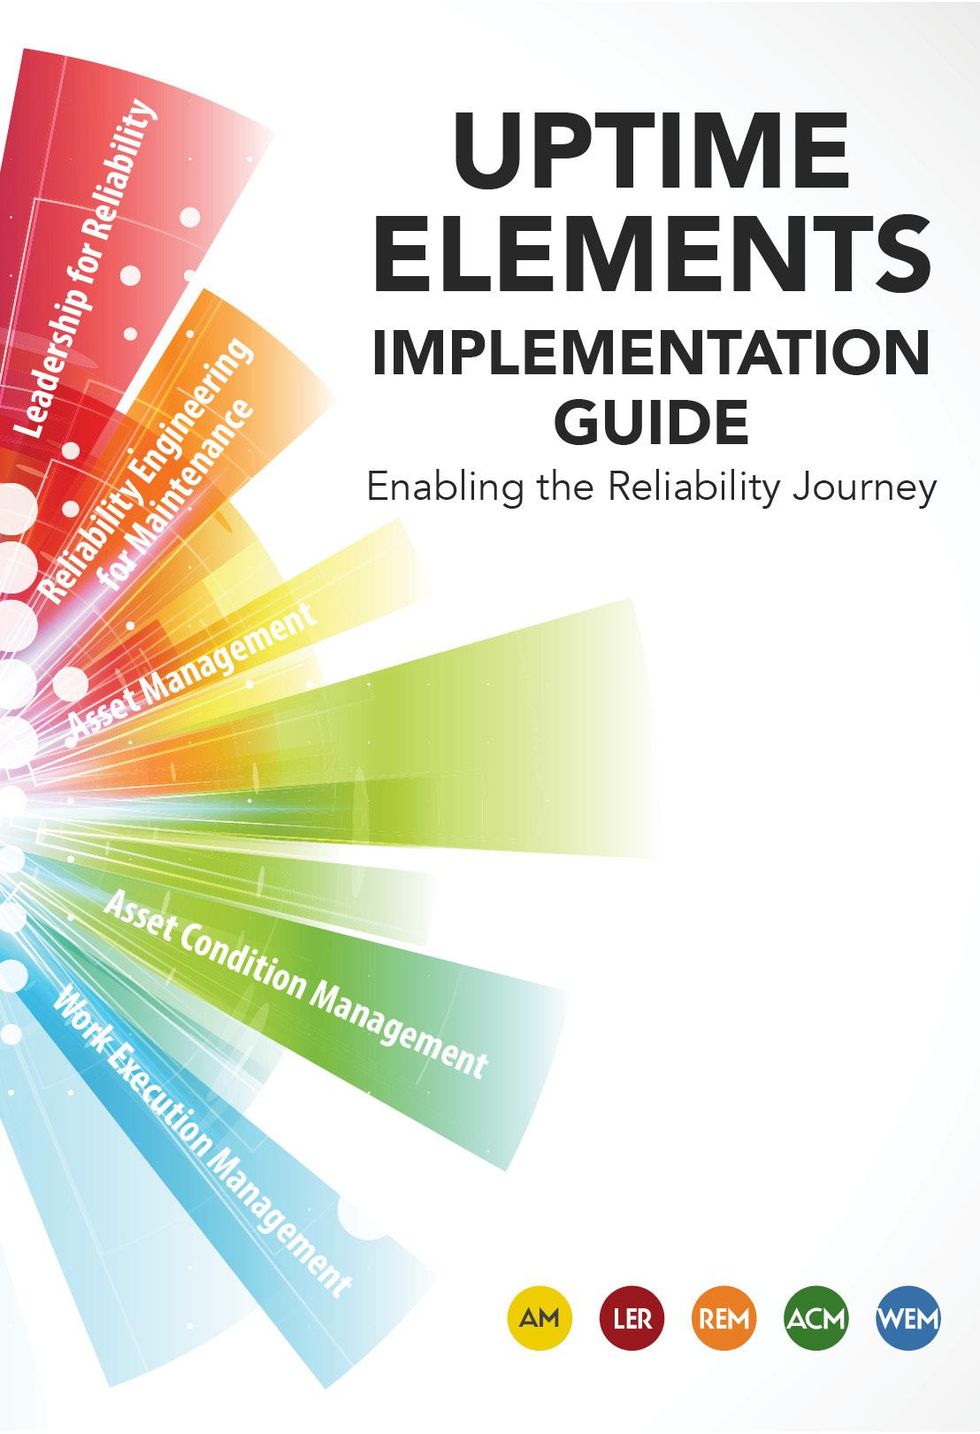 Uptime Elements Implementation Guide_Lead Image